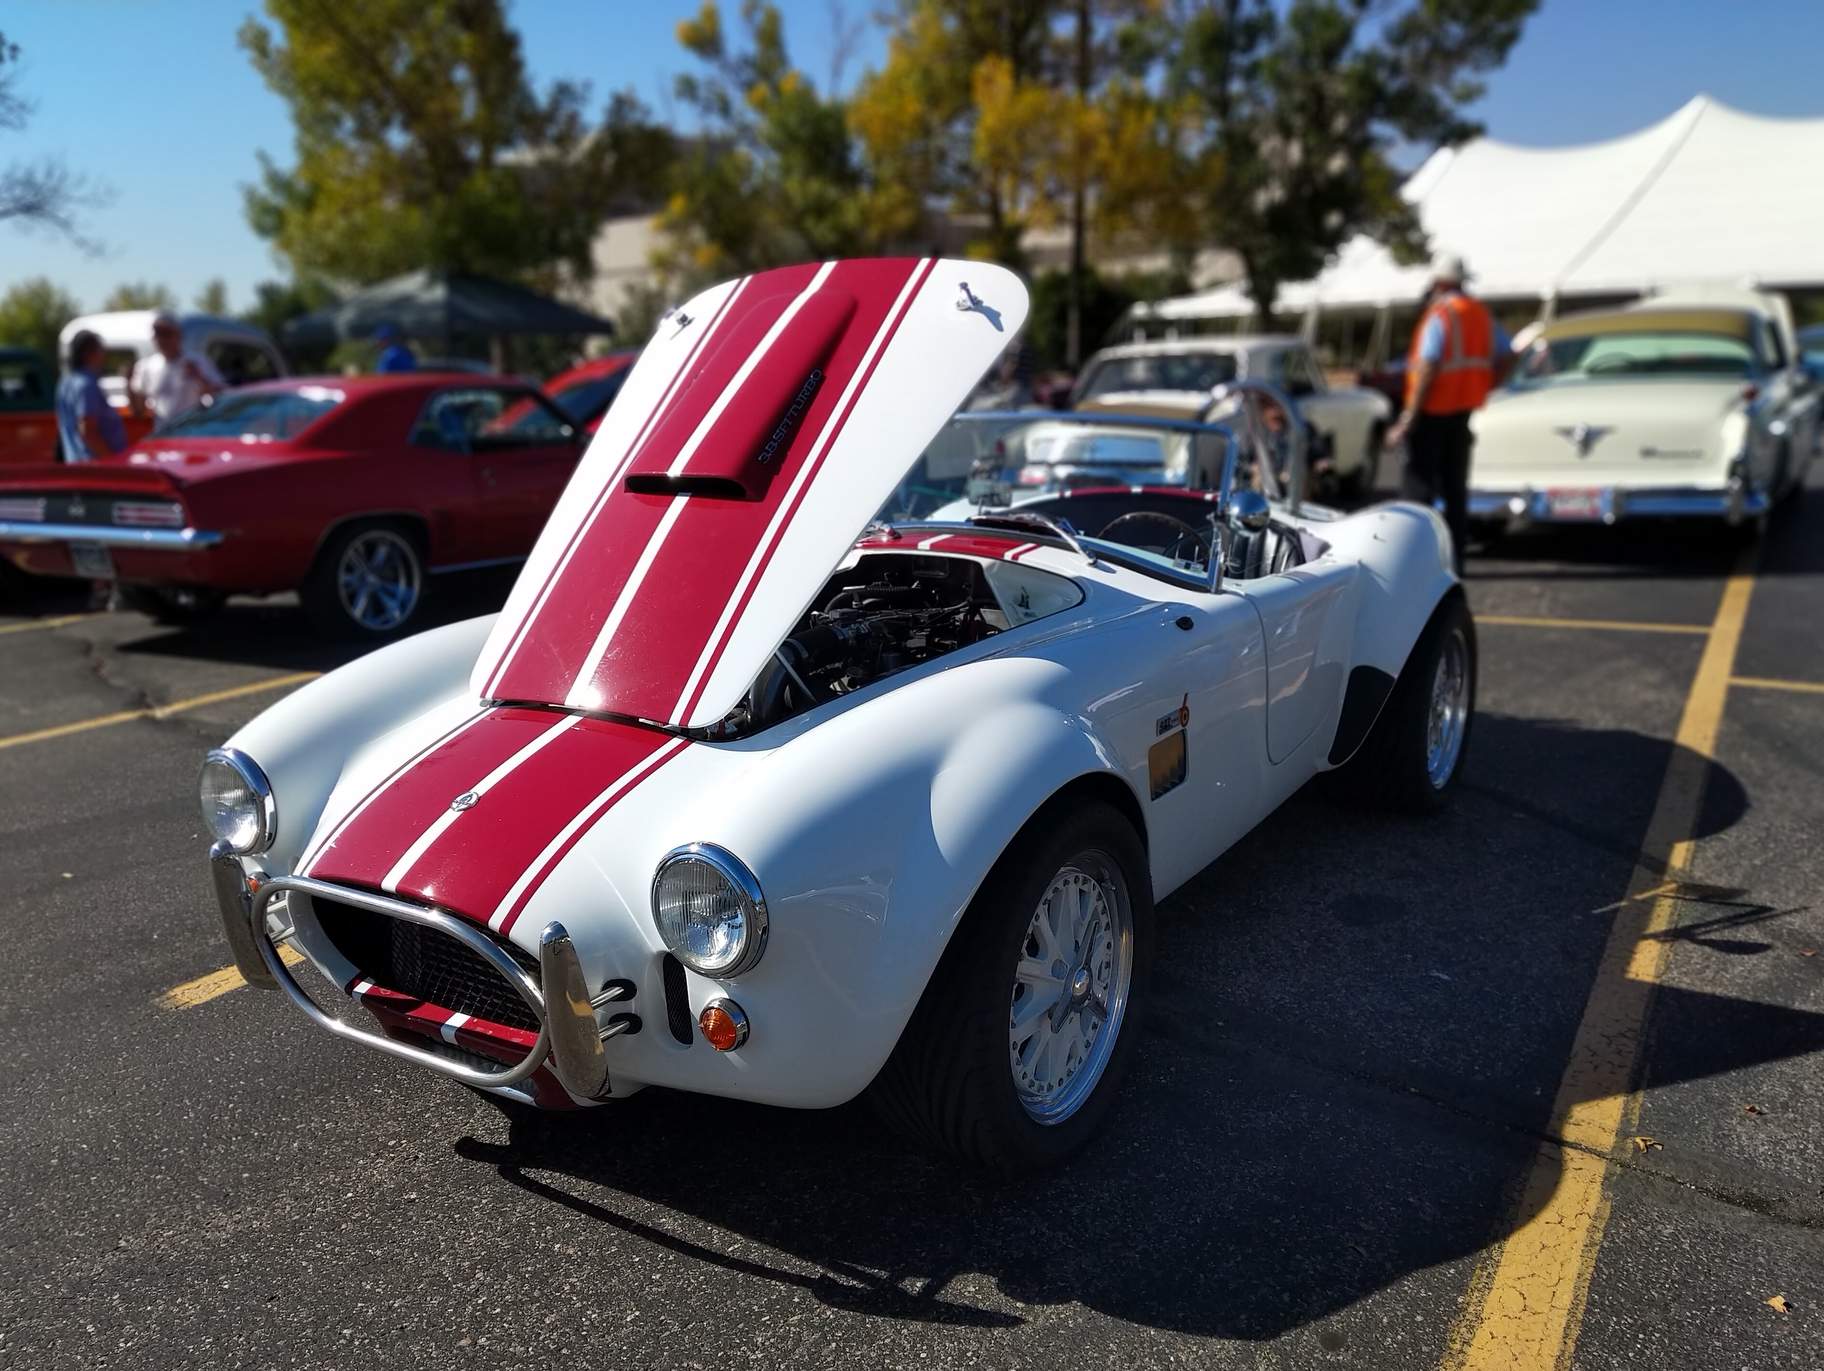 A white AC Cobra replica with red racing stripes.